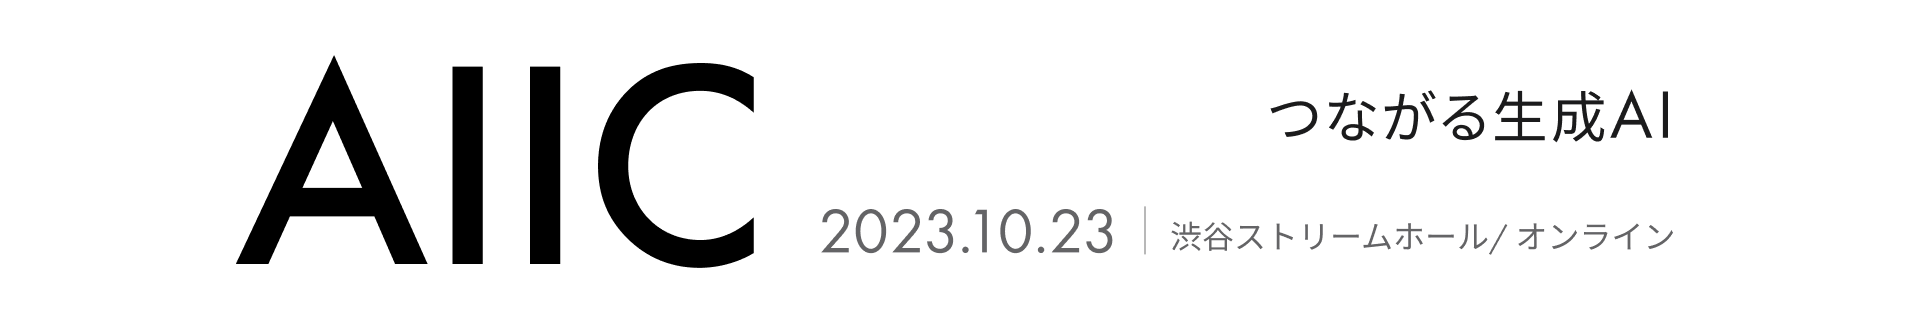 AIIC つながる生成AI 2023.10.23 渋谷ストリームホール/オンライン